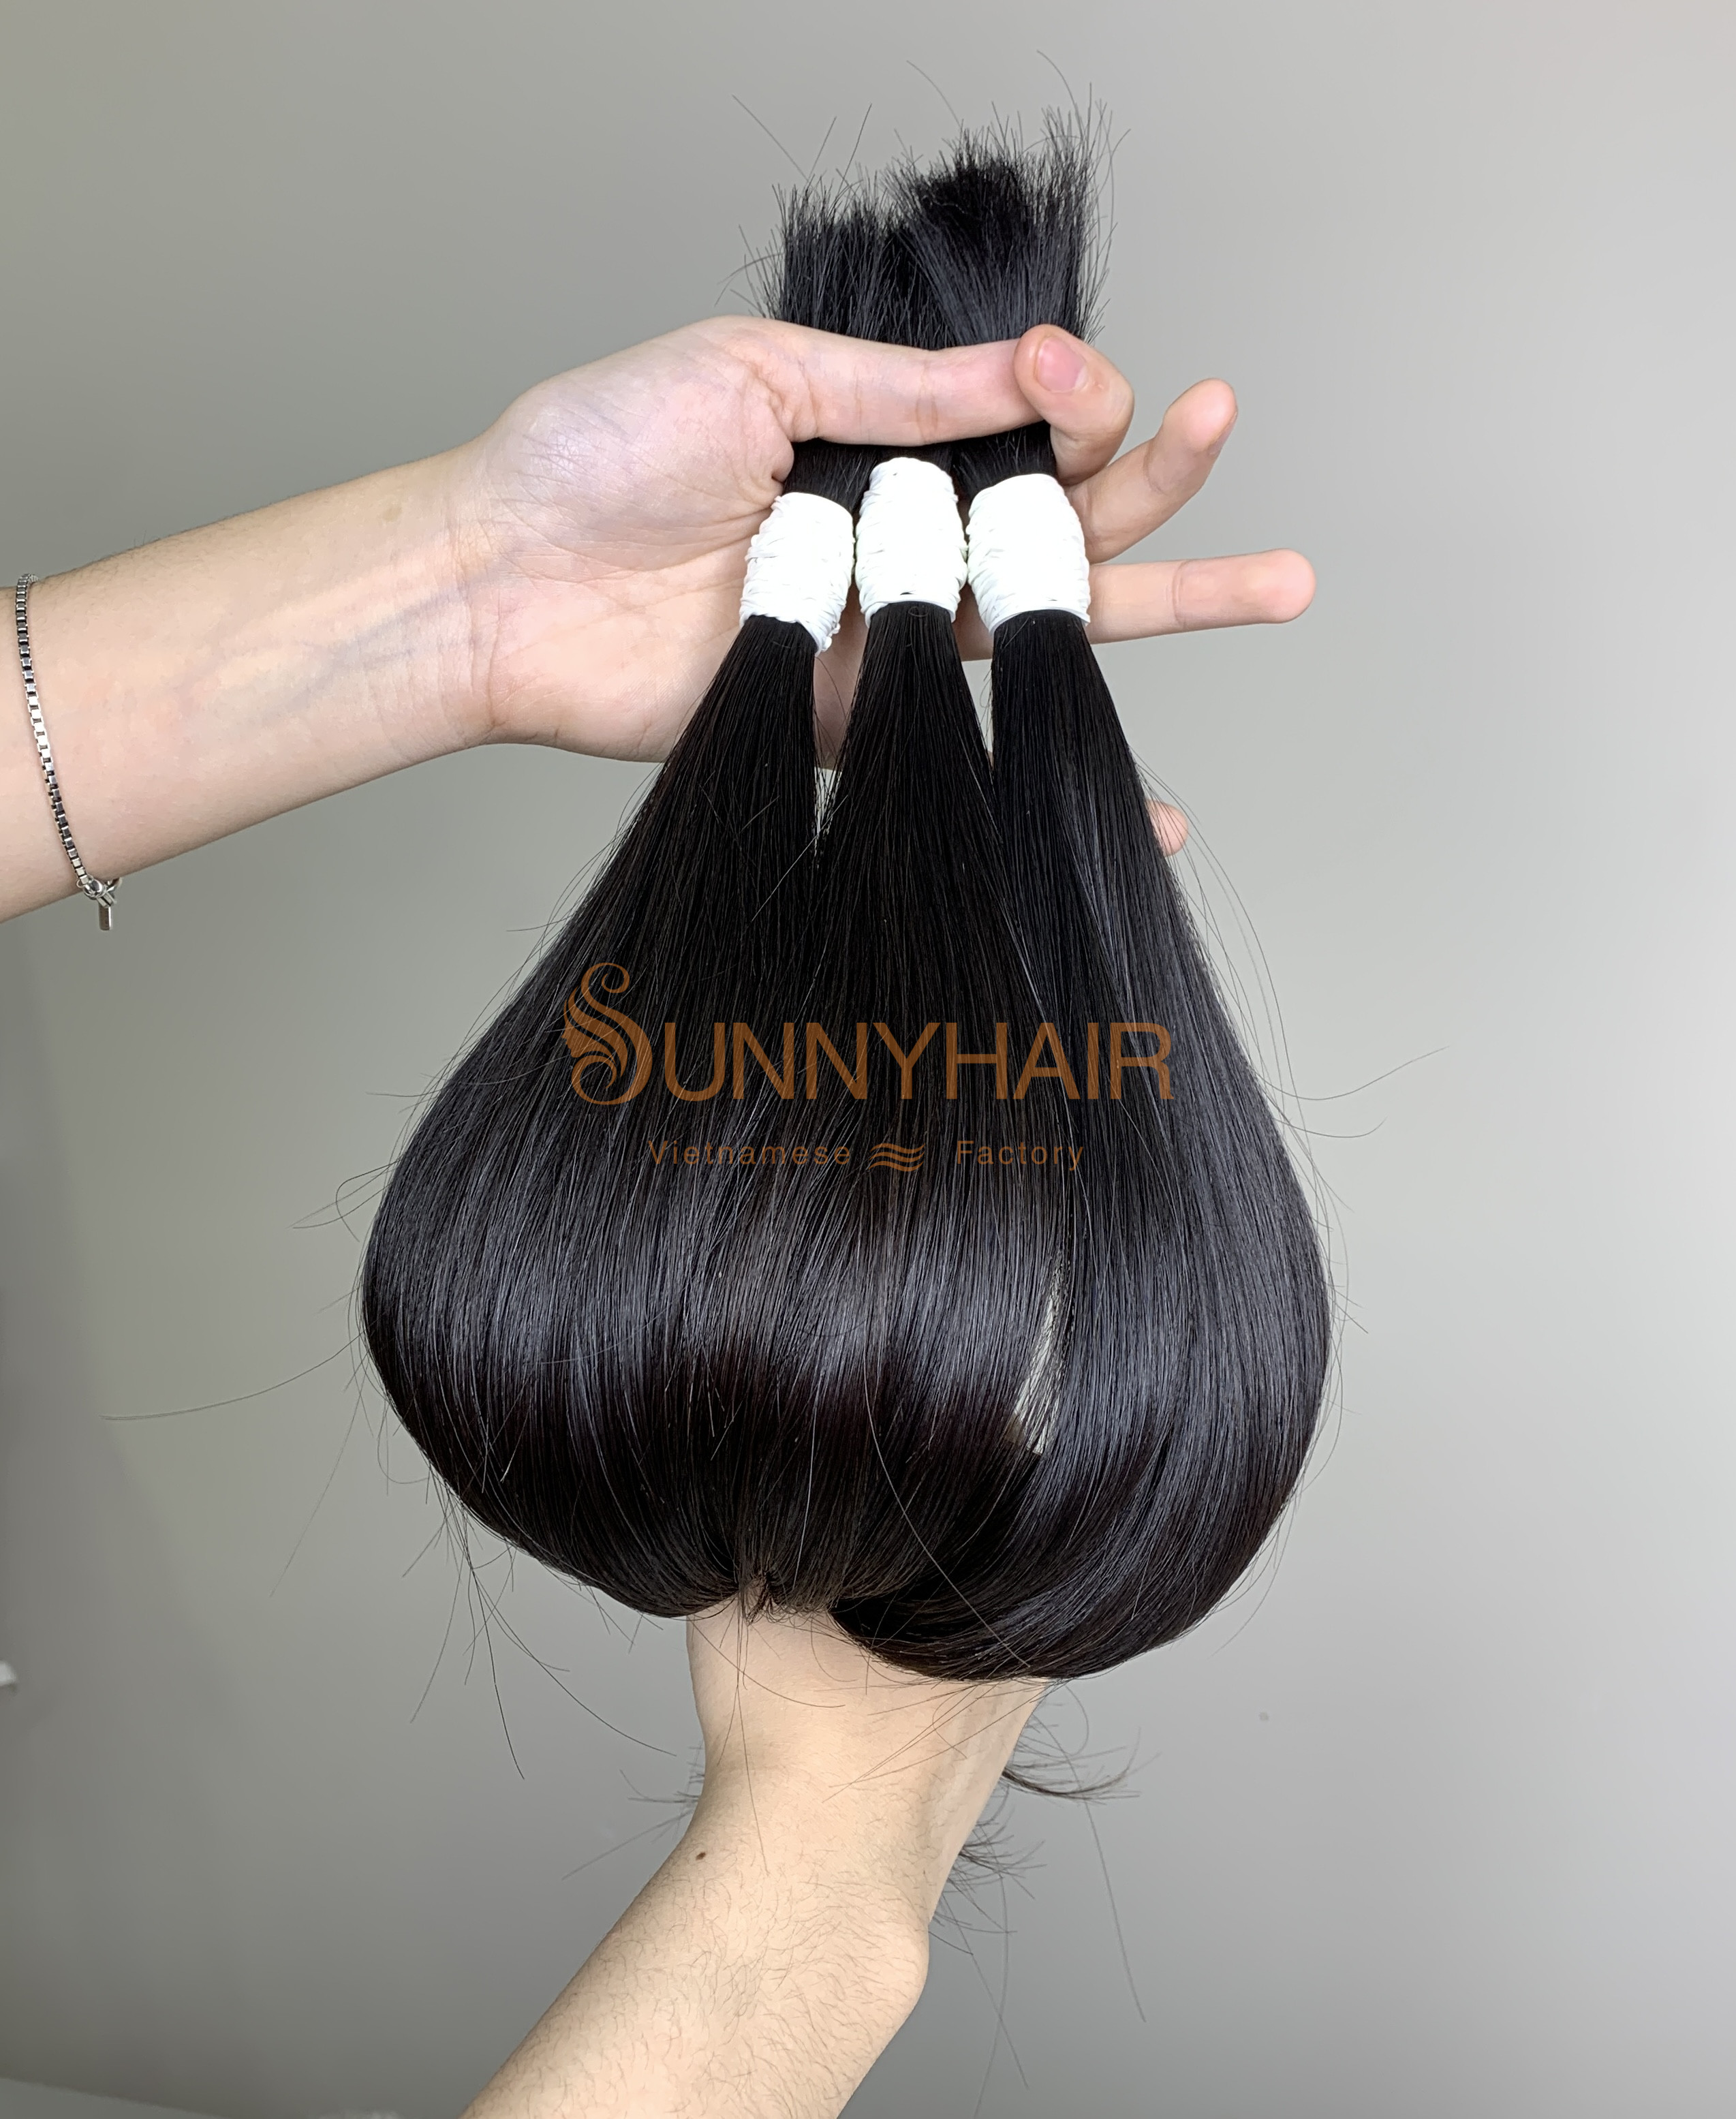 Wholesale human hair bundle hair extensions super double drawn - Best  Supplier of 100% Human Hair in Vietnam